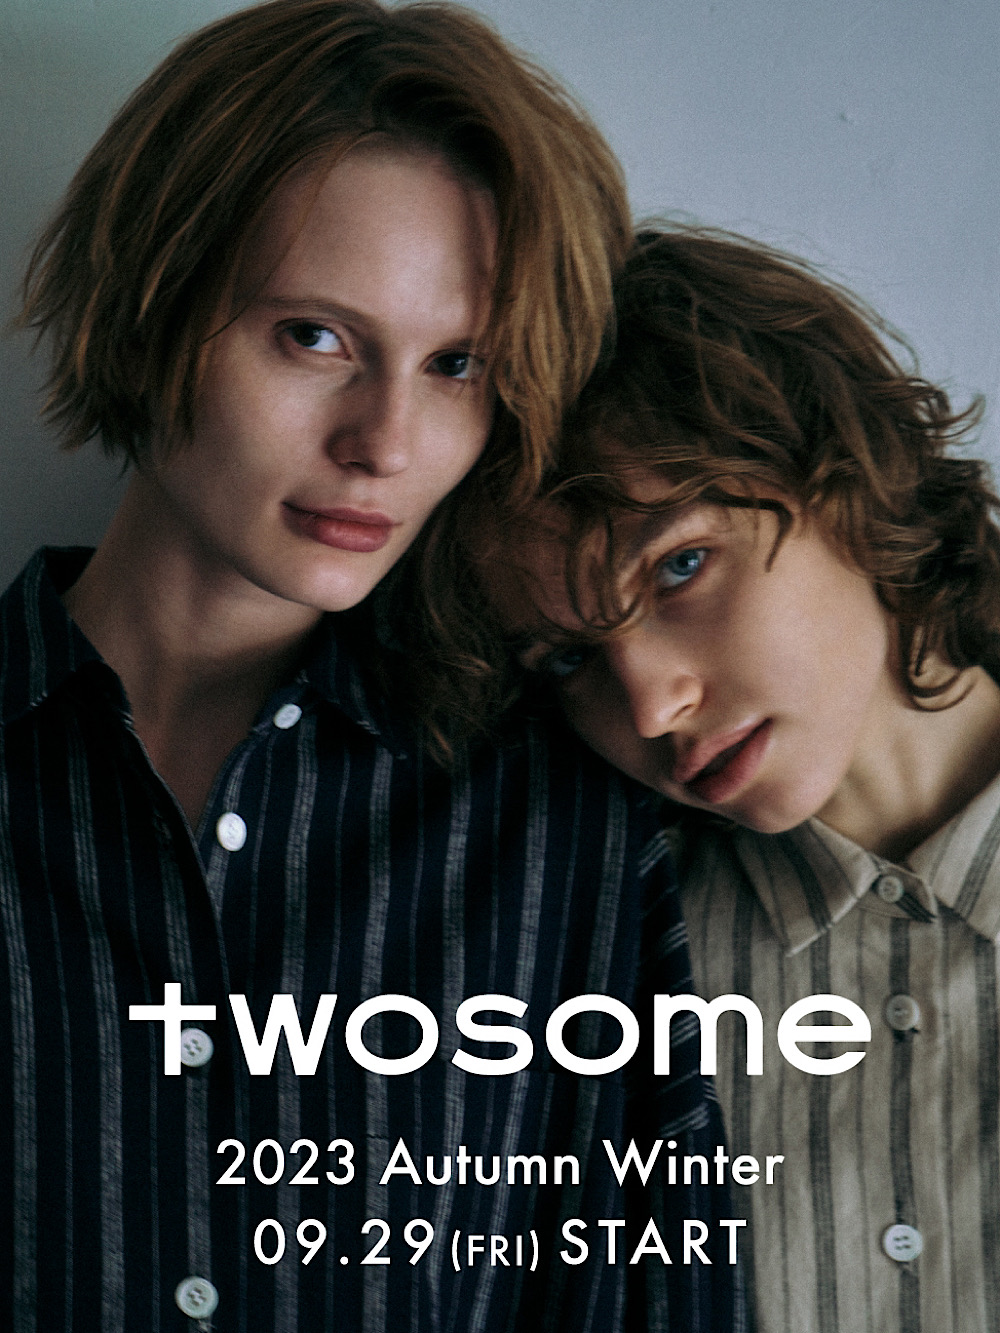 twosome -2023 Autumn Winter - Pre order start